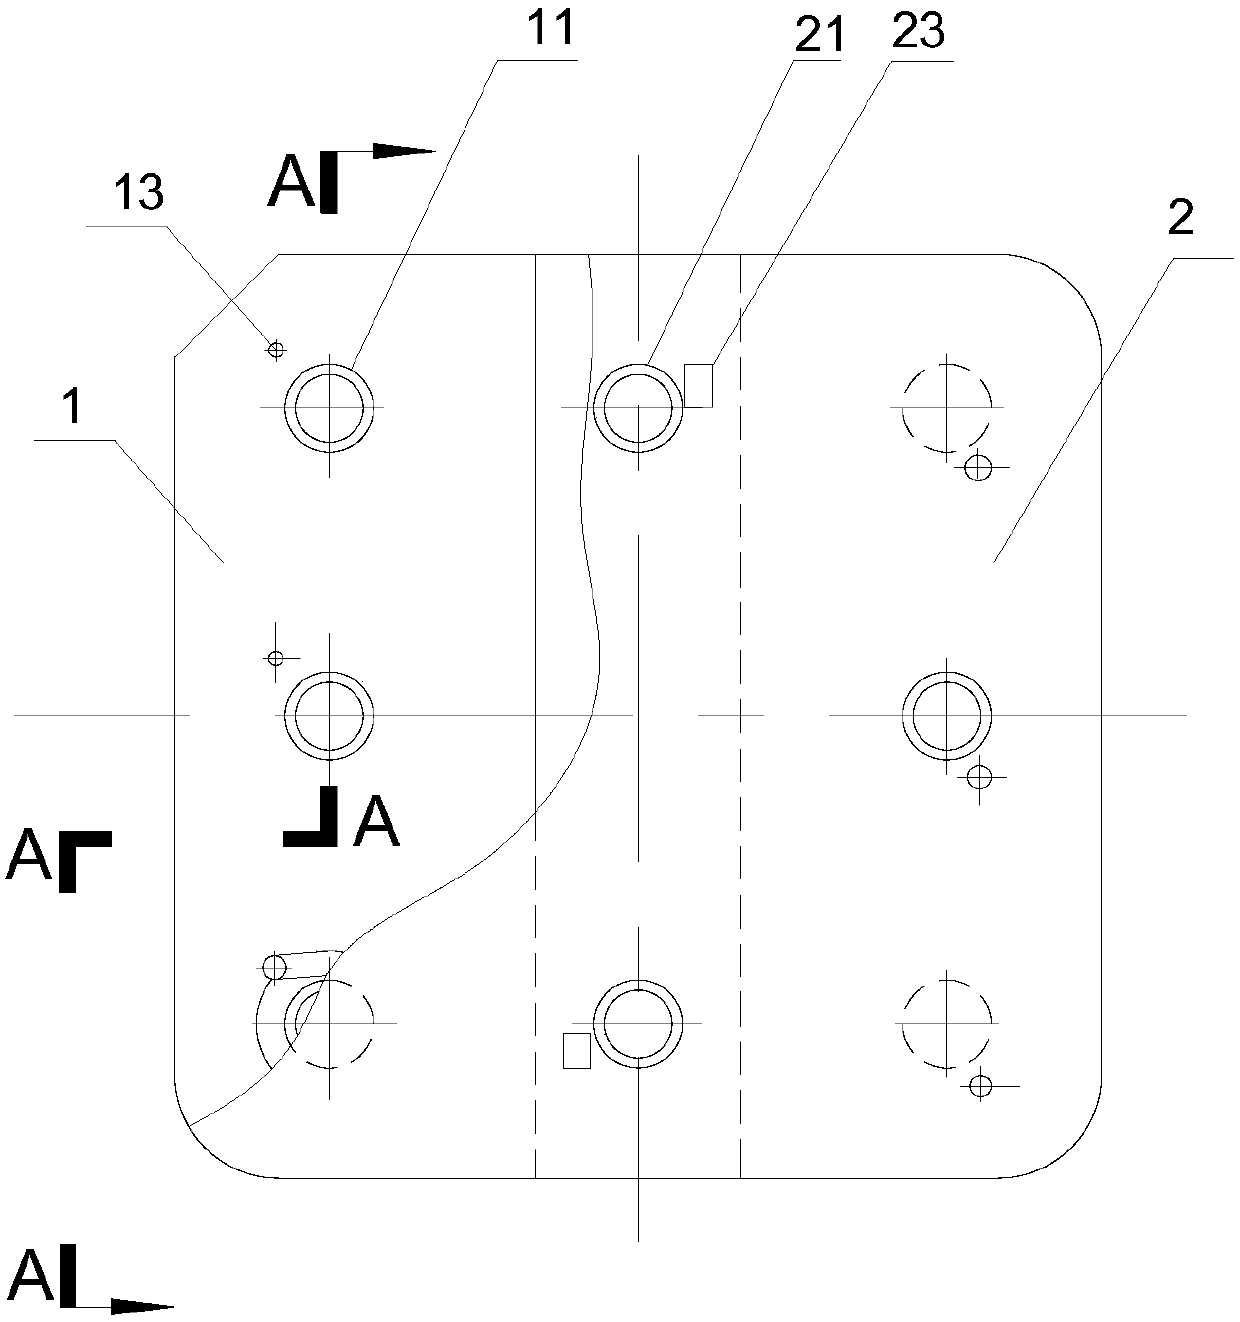 Multi-specification circuit breaker coil element test jig